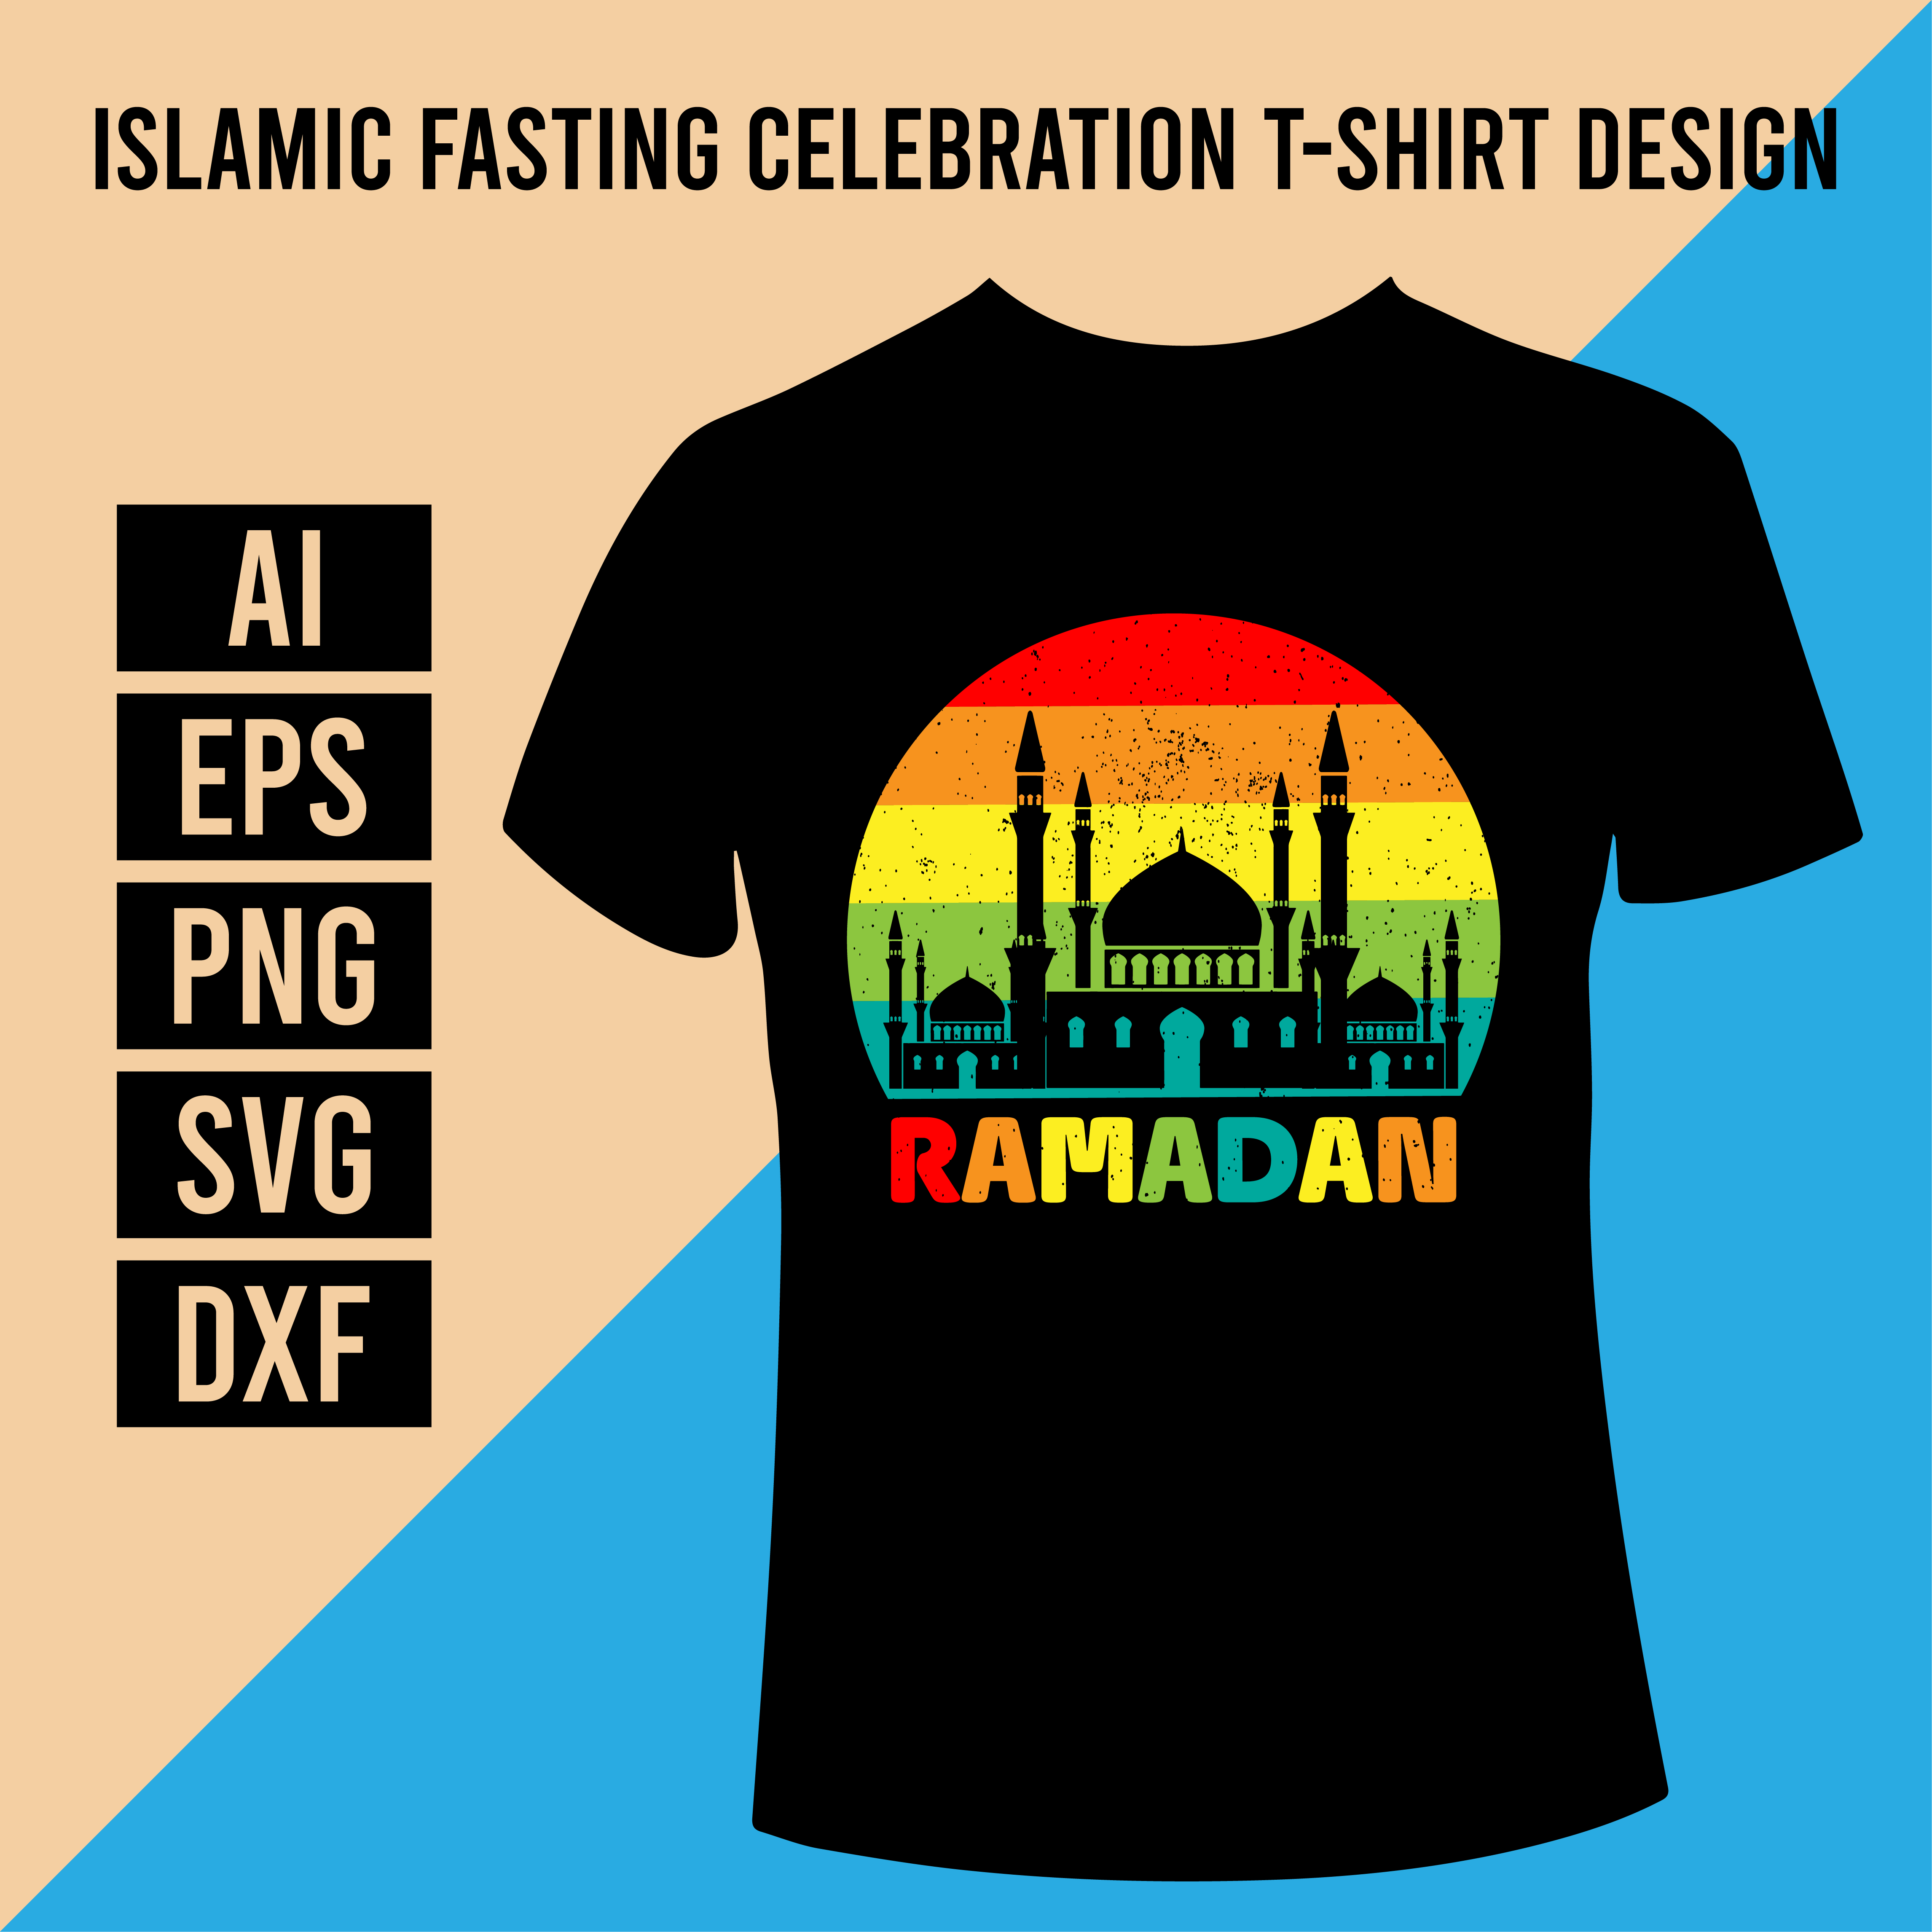 Islamic Fasting Celebration T-Shirt Design cover image.